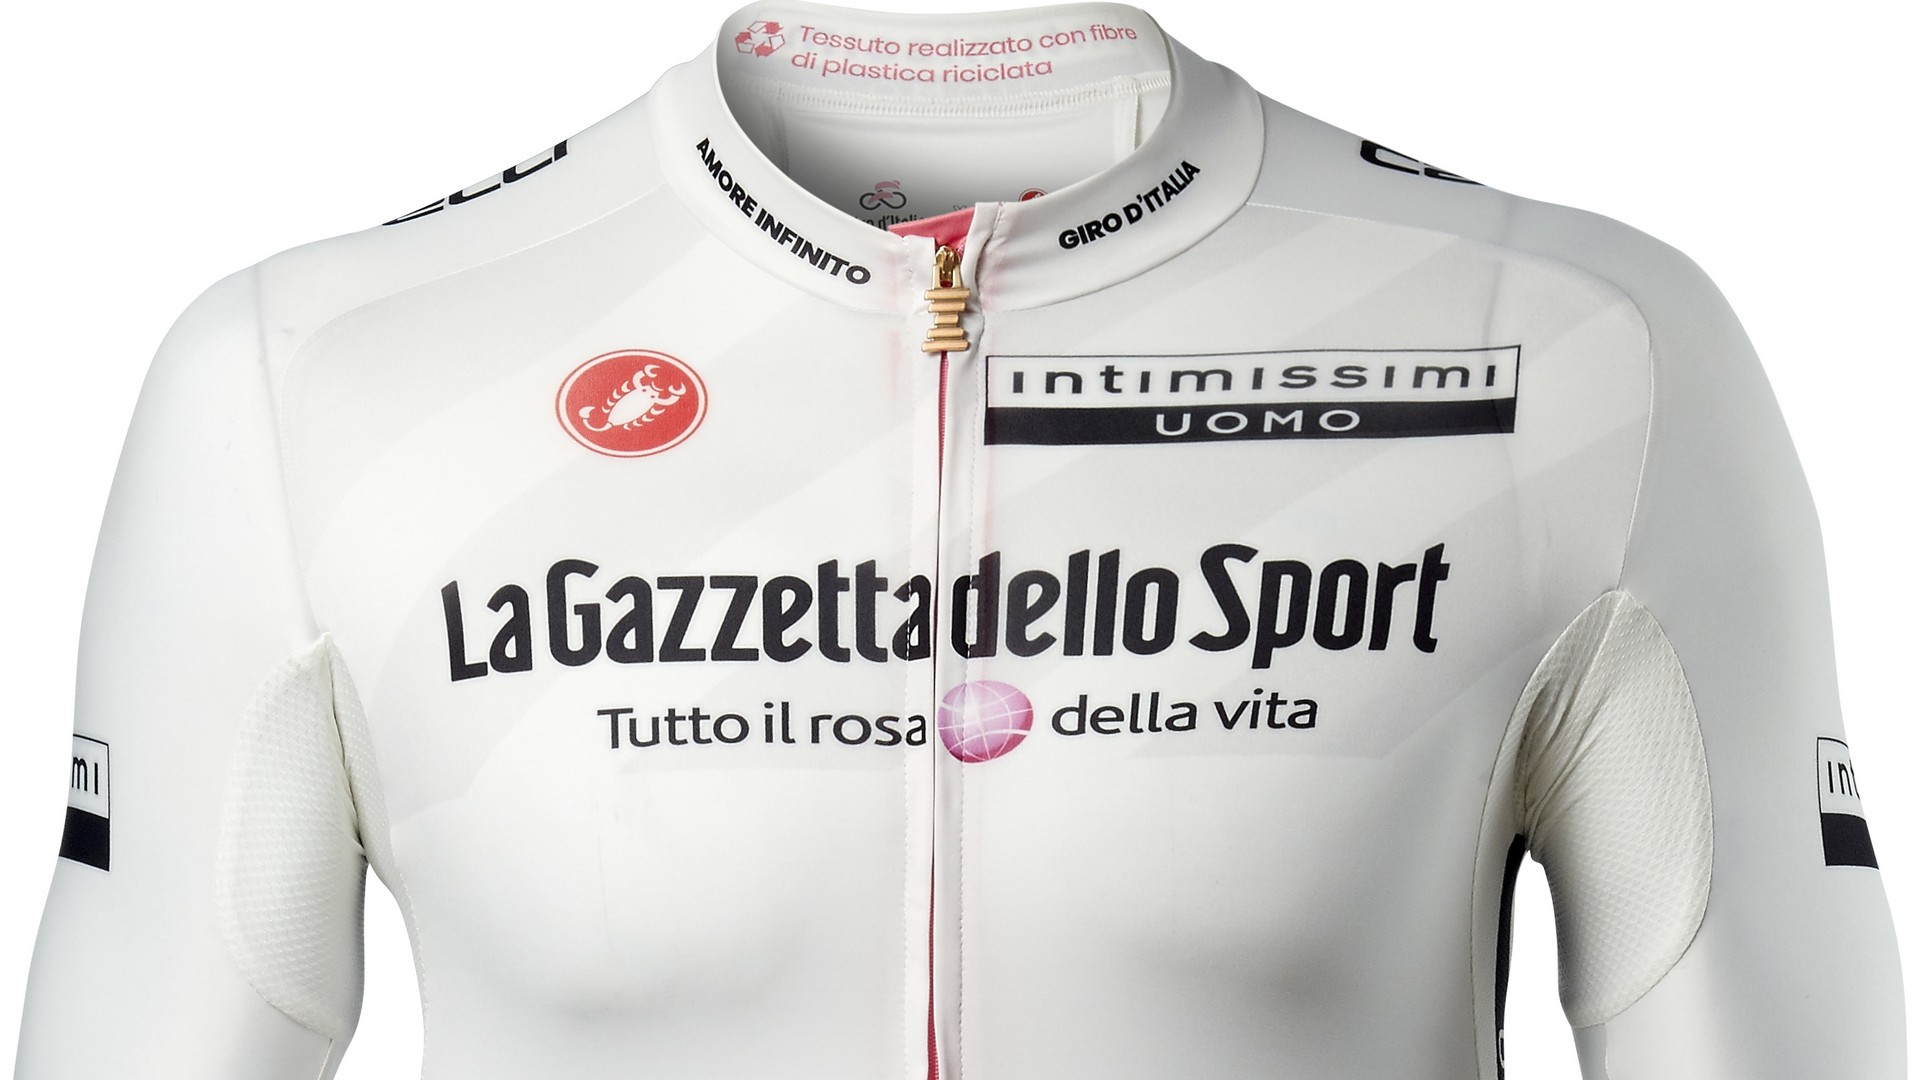 Intimissimi Uomo x Giro (cyclisme) 2021